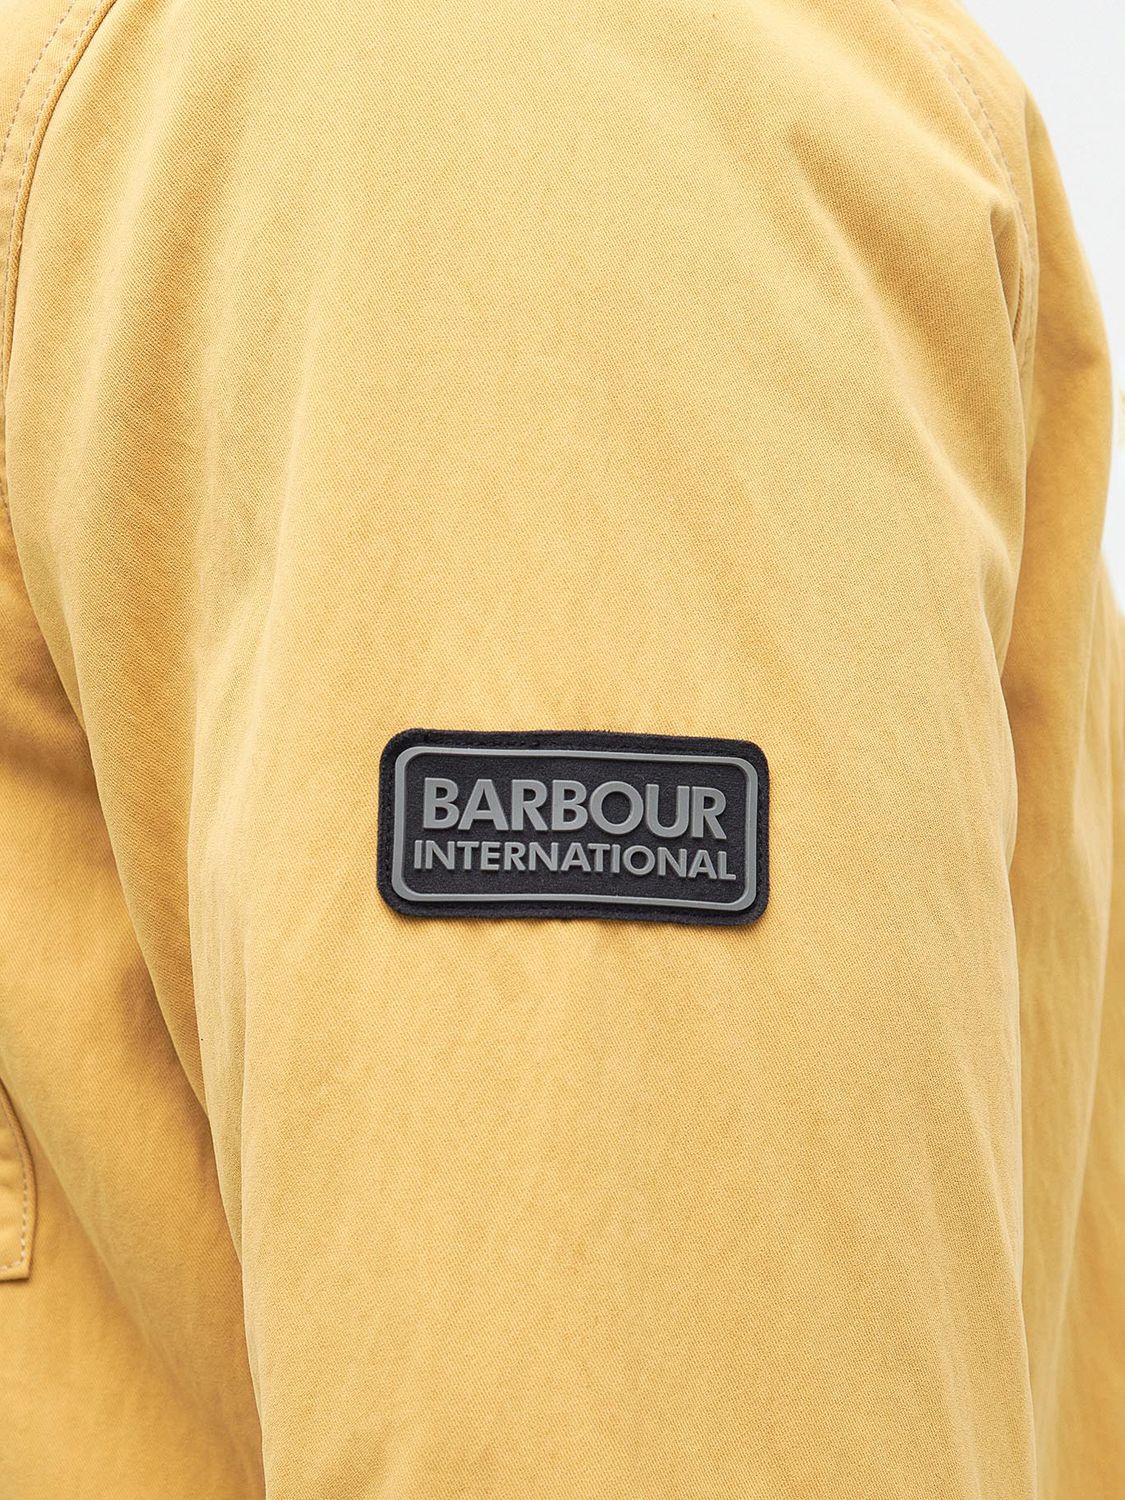 Barbour International Dome Overshirt, Mustard Gold, L